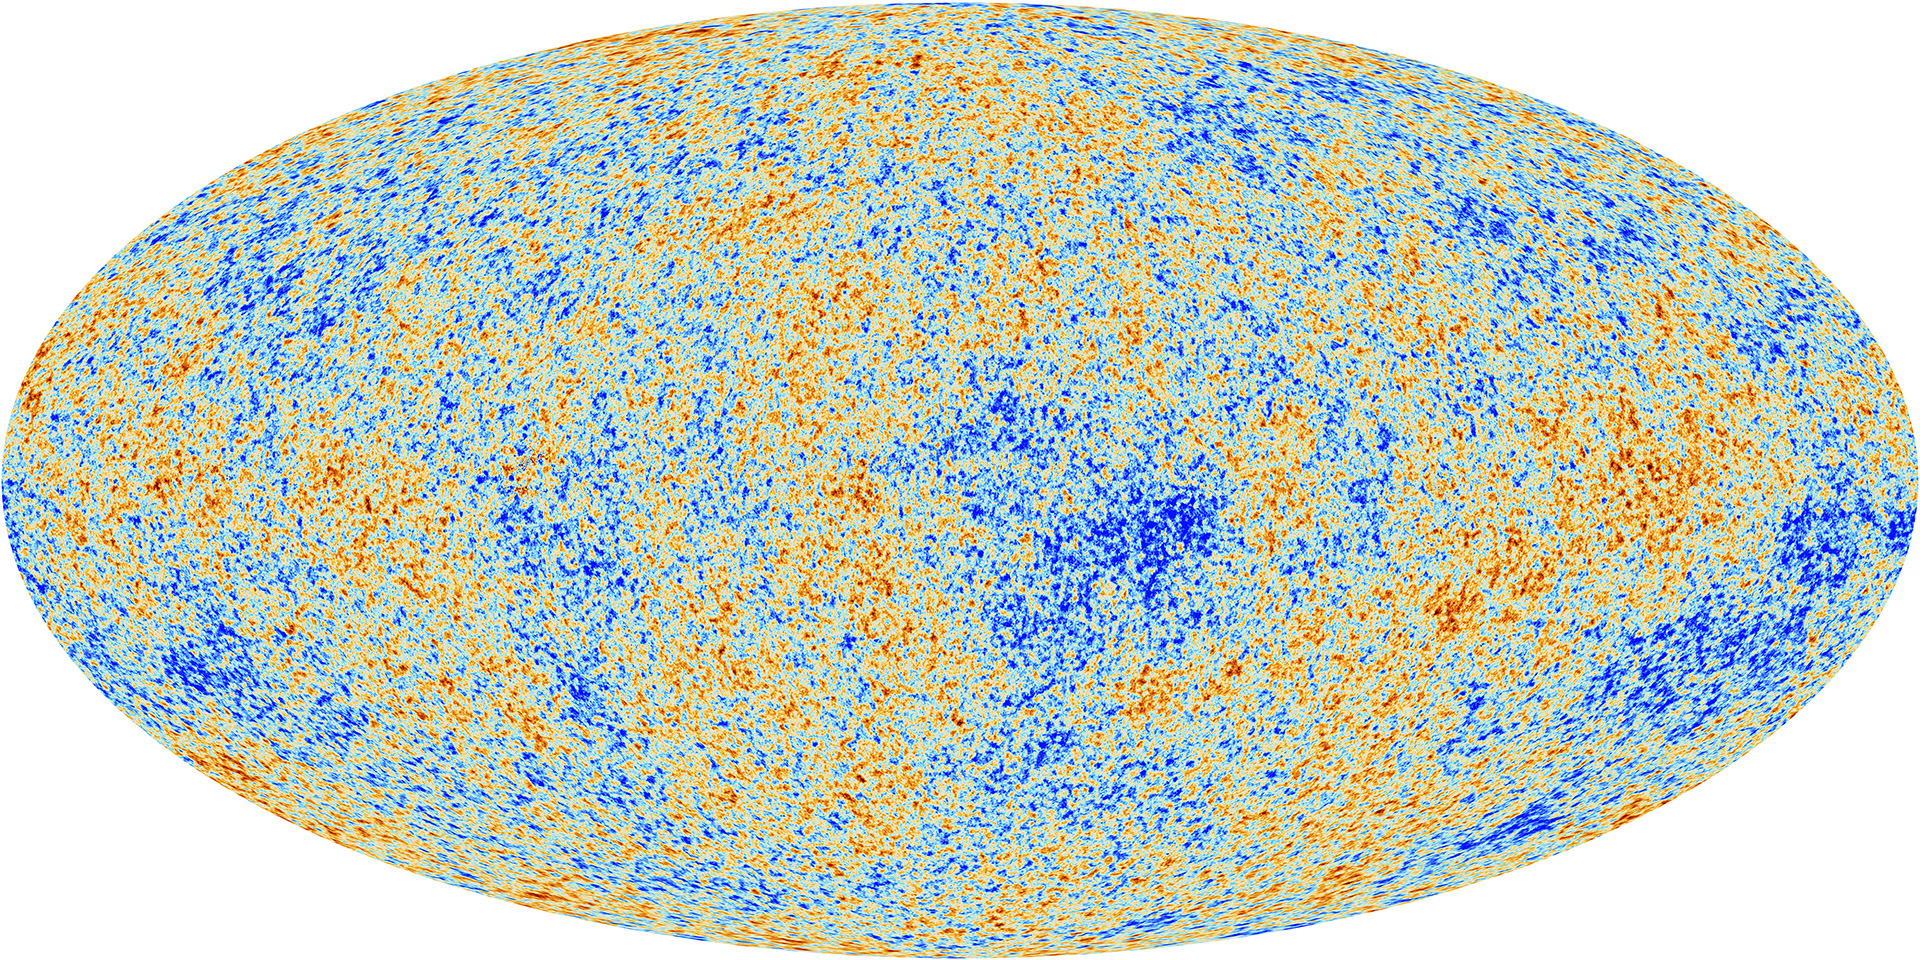 Planck CMB sky image